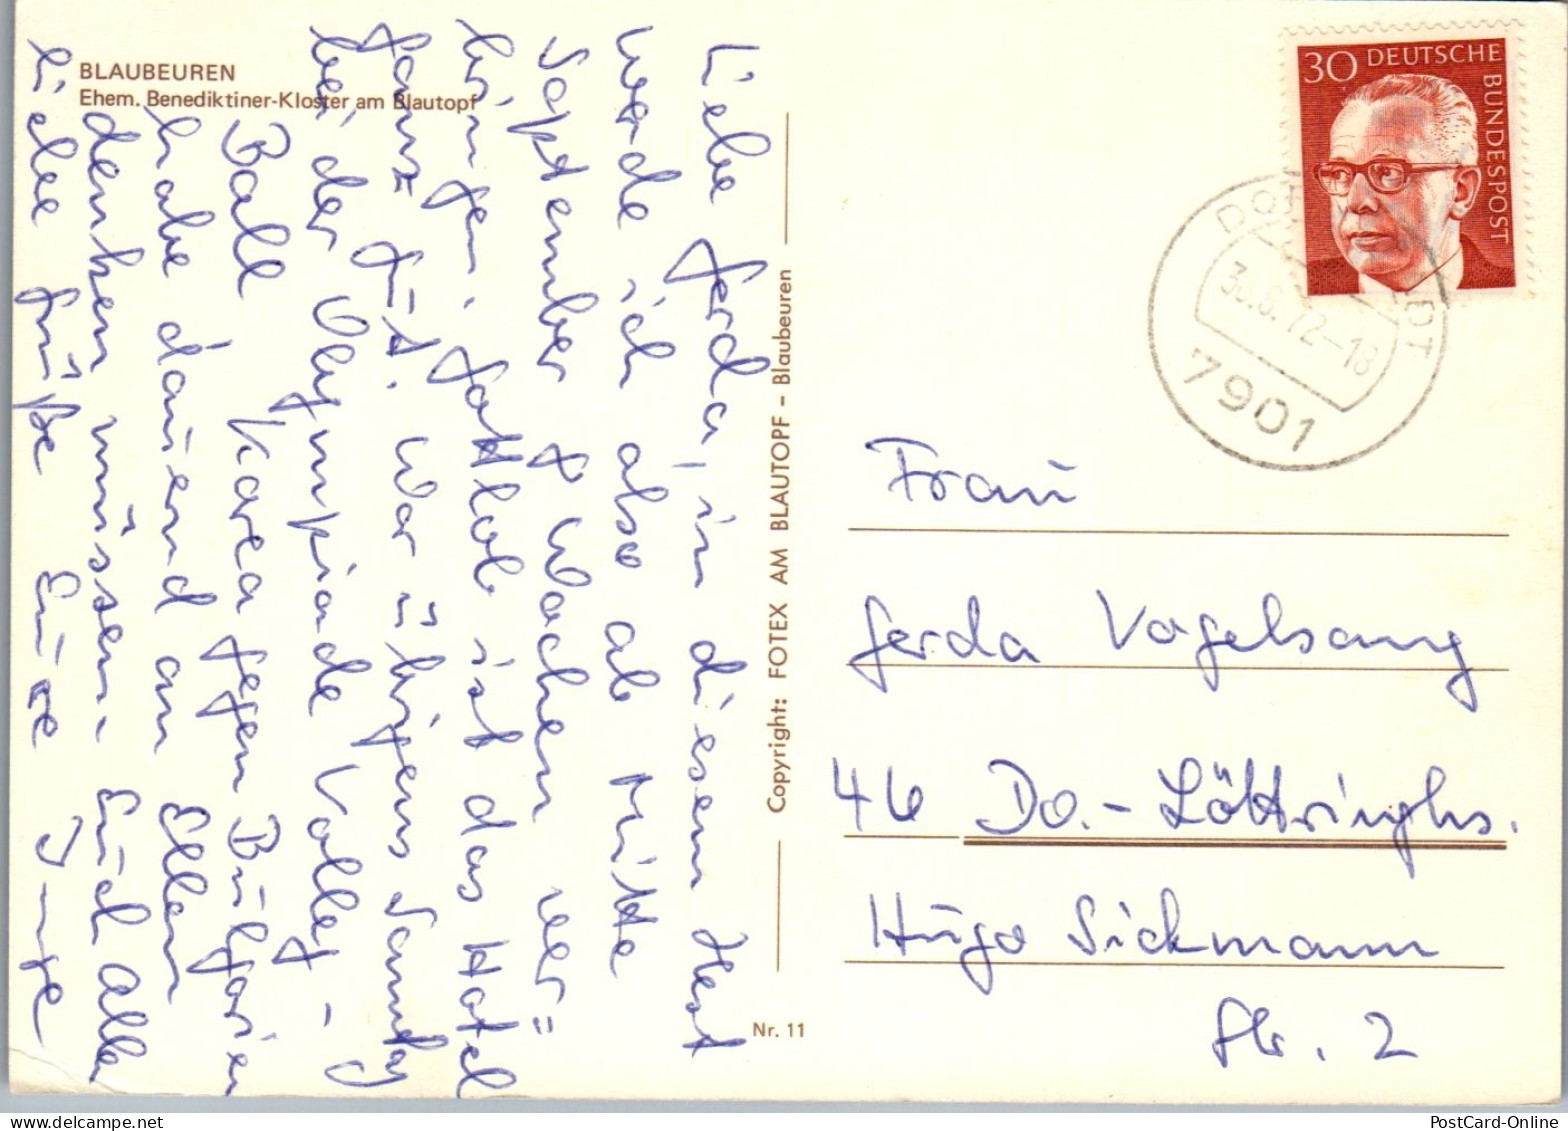 44355 - Deutschland - Blaubeuren , Ehem. Benediktiner Kloster Am Blautopf - Gelaufen 1972 - Blaubeuren